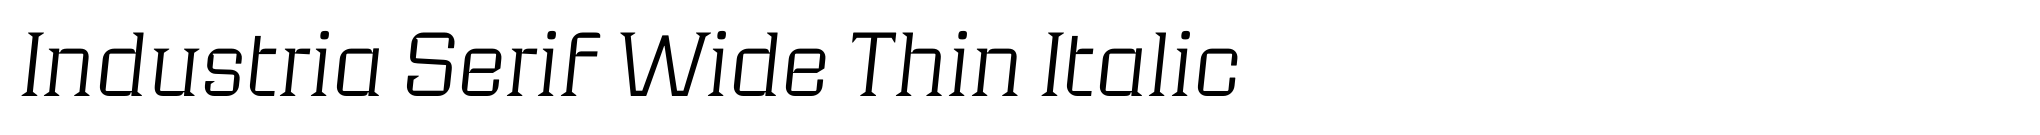 Industria Serif Wide Thin Italic image